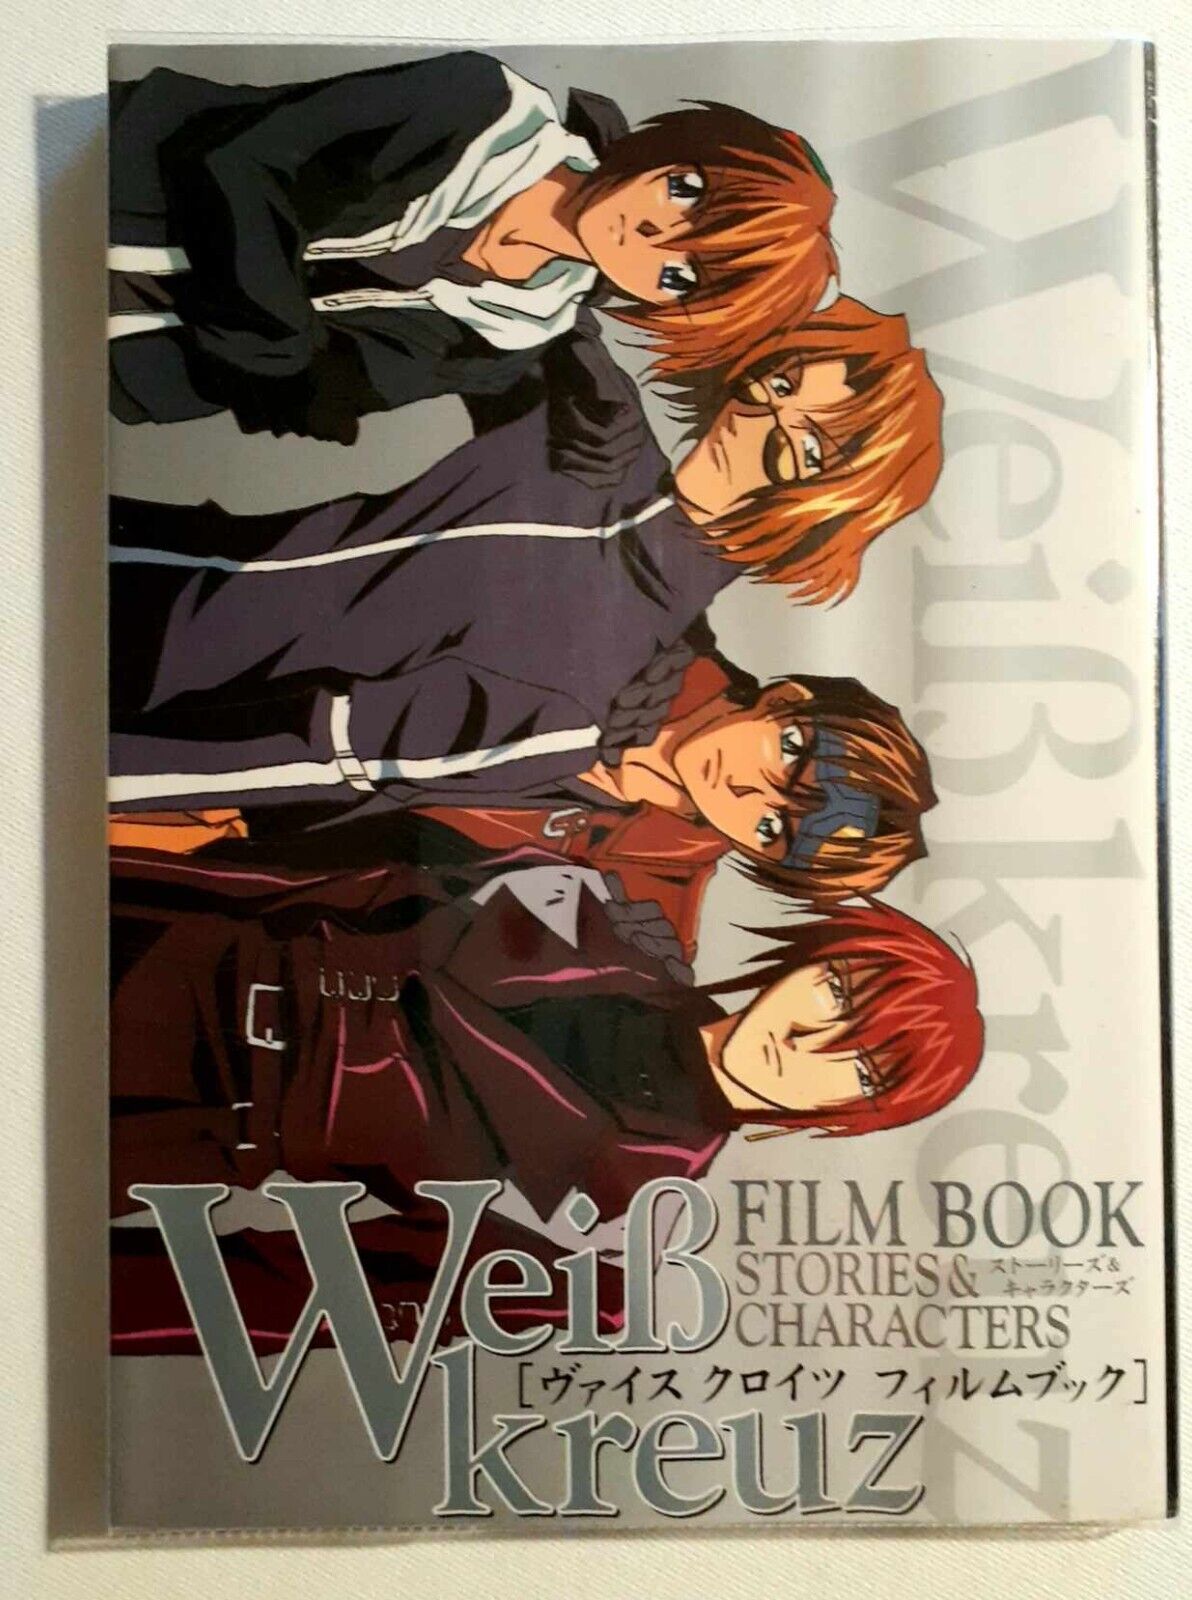 Weiss Kreuz Film Book KNIGHT HUNTERS rare out of print JAPANESE MANGA